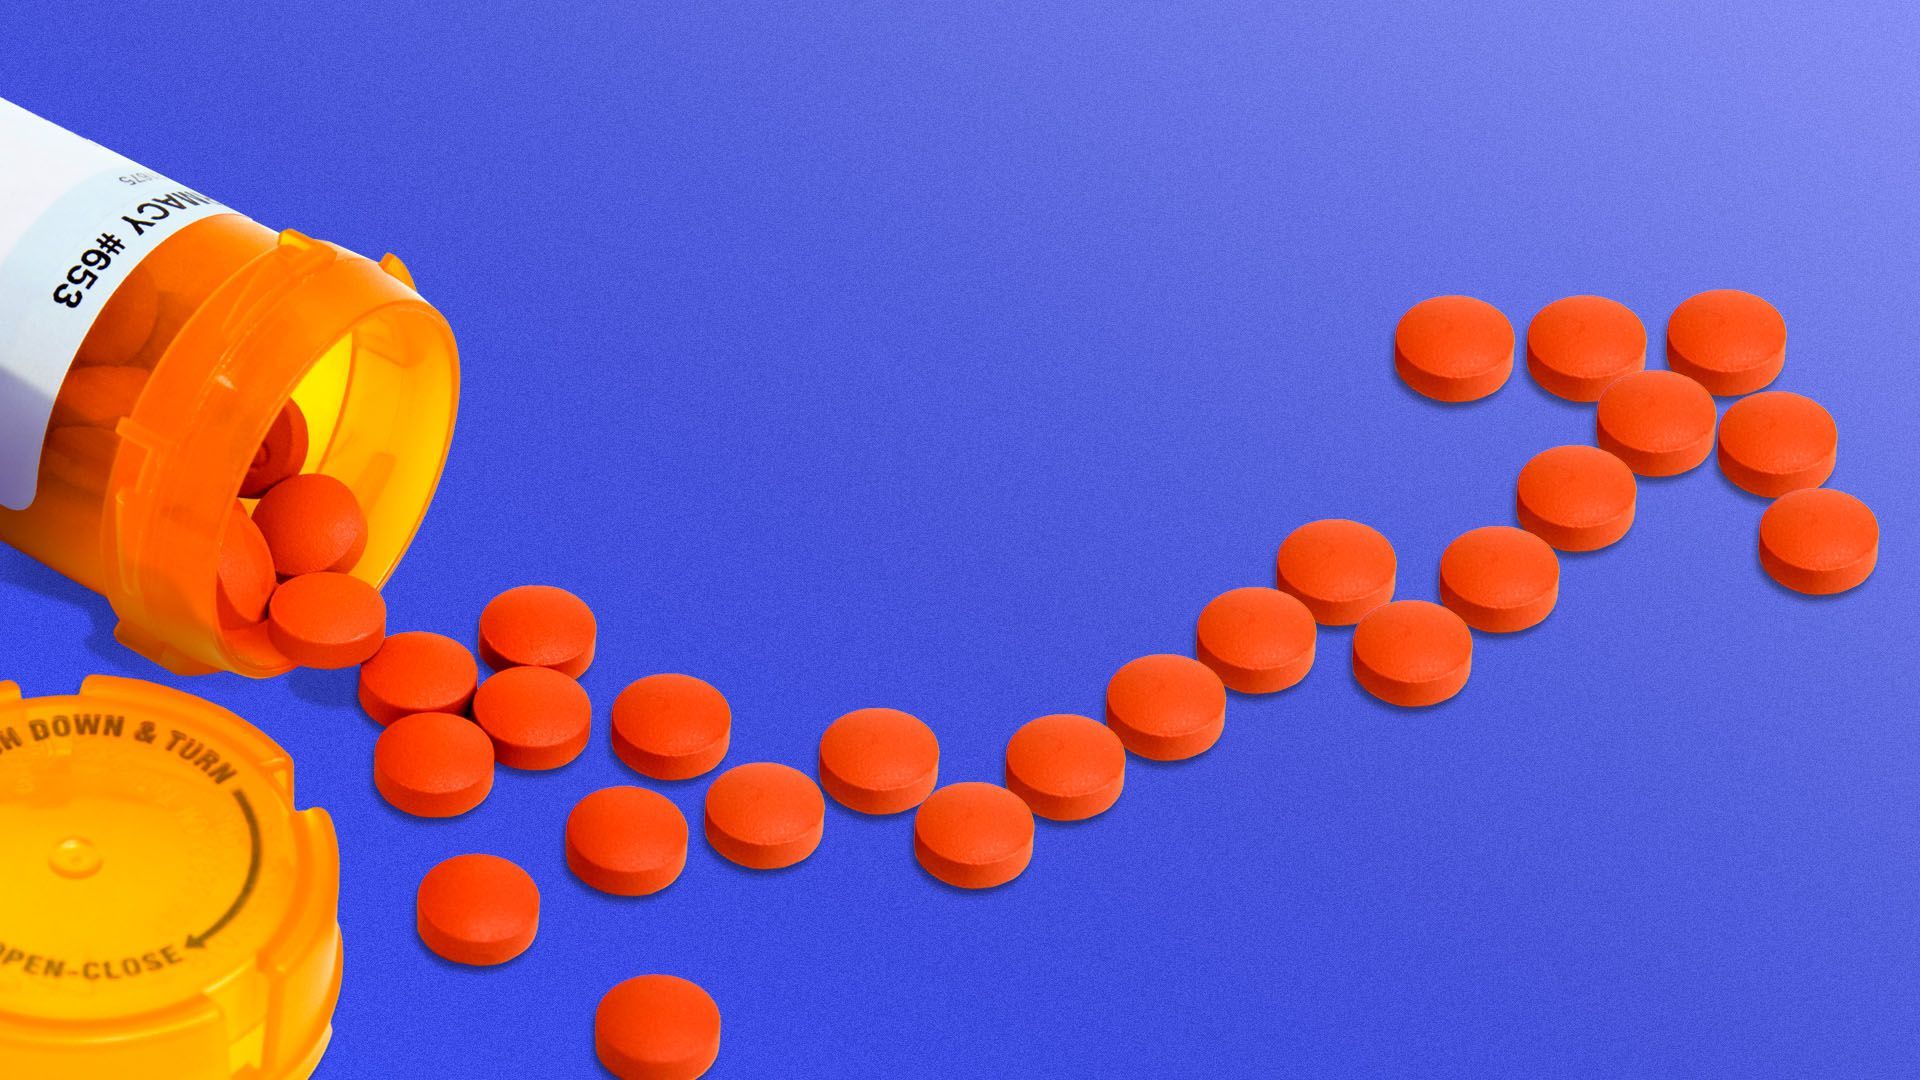 Illustration of a turn over pill bottle the pills forming an upward trending arrow.